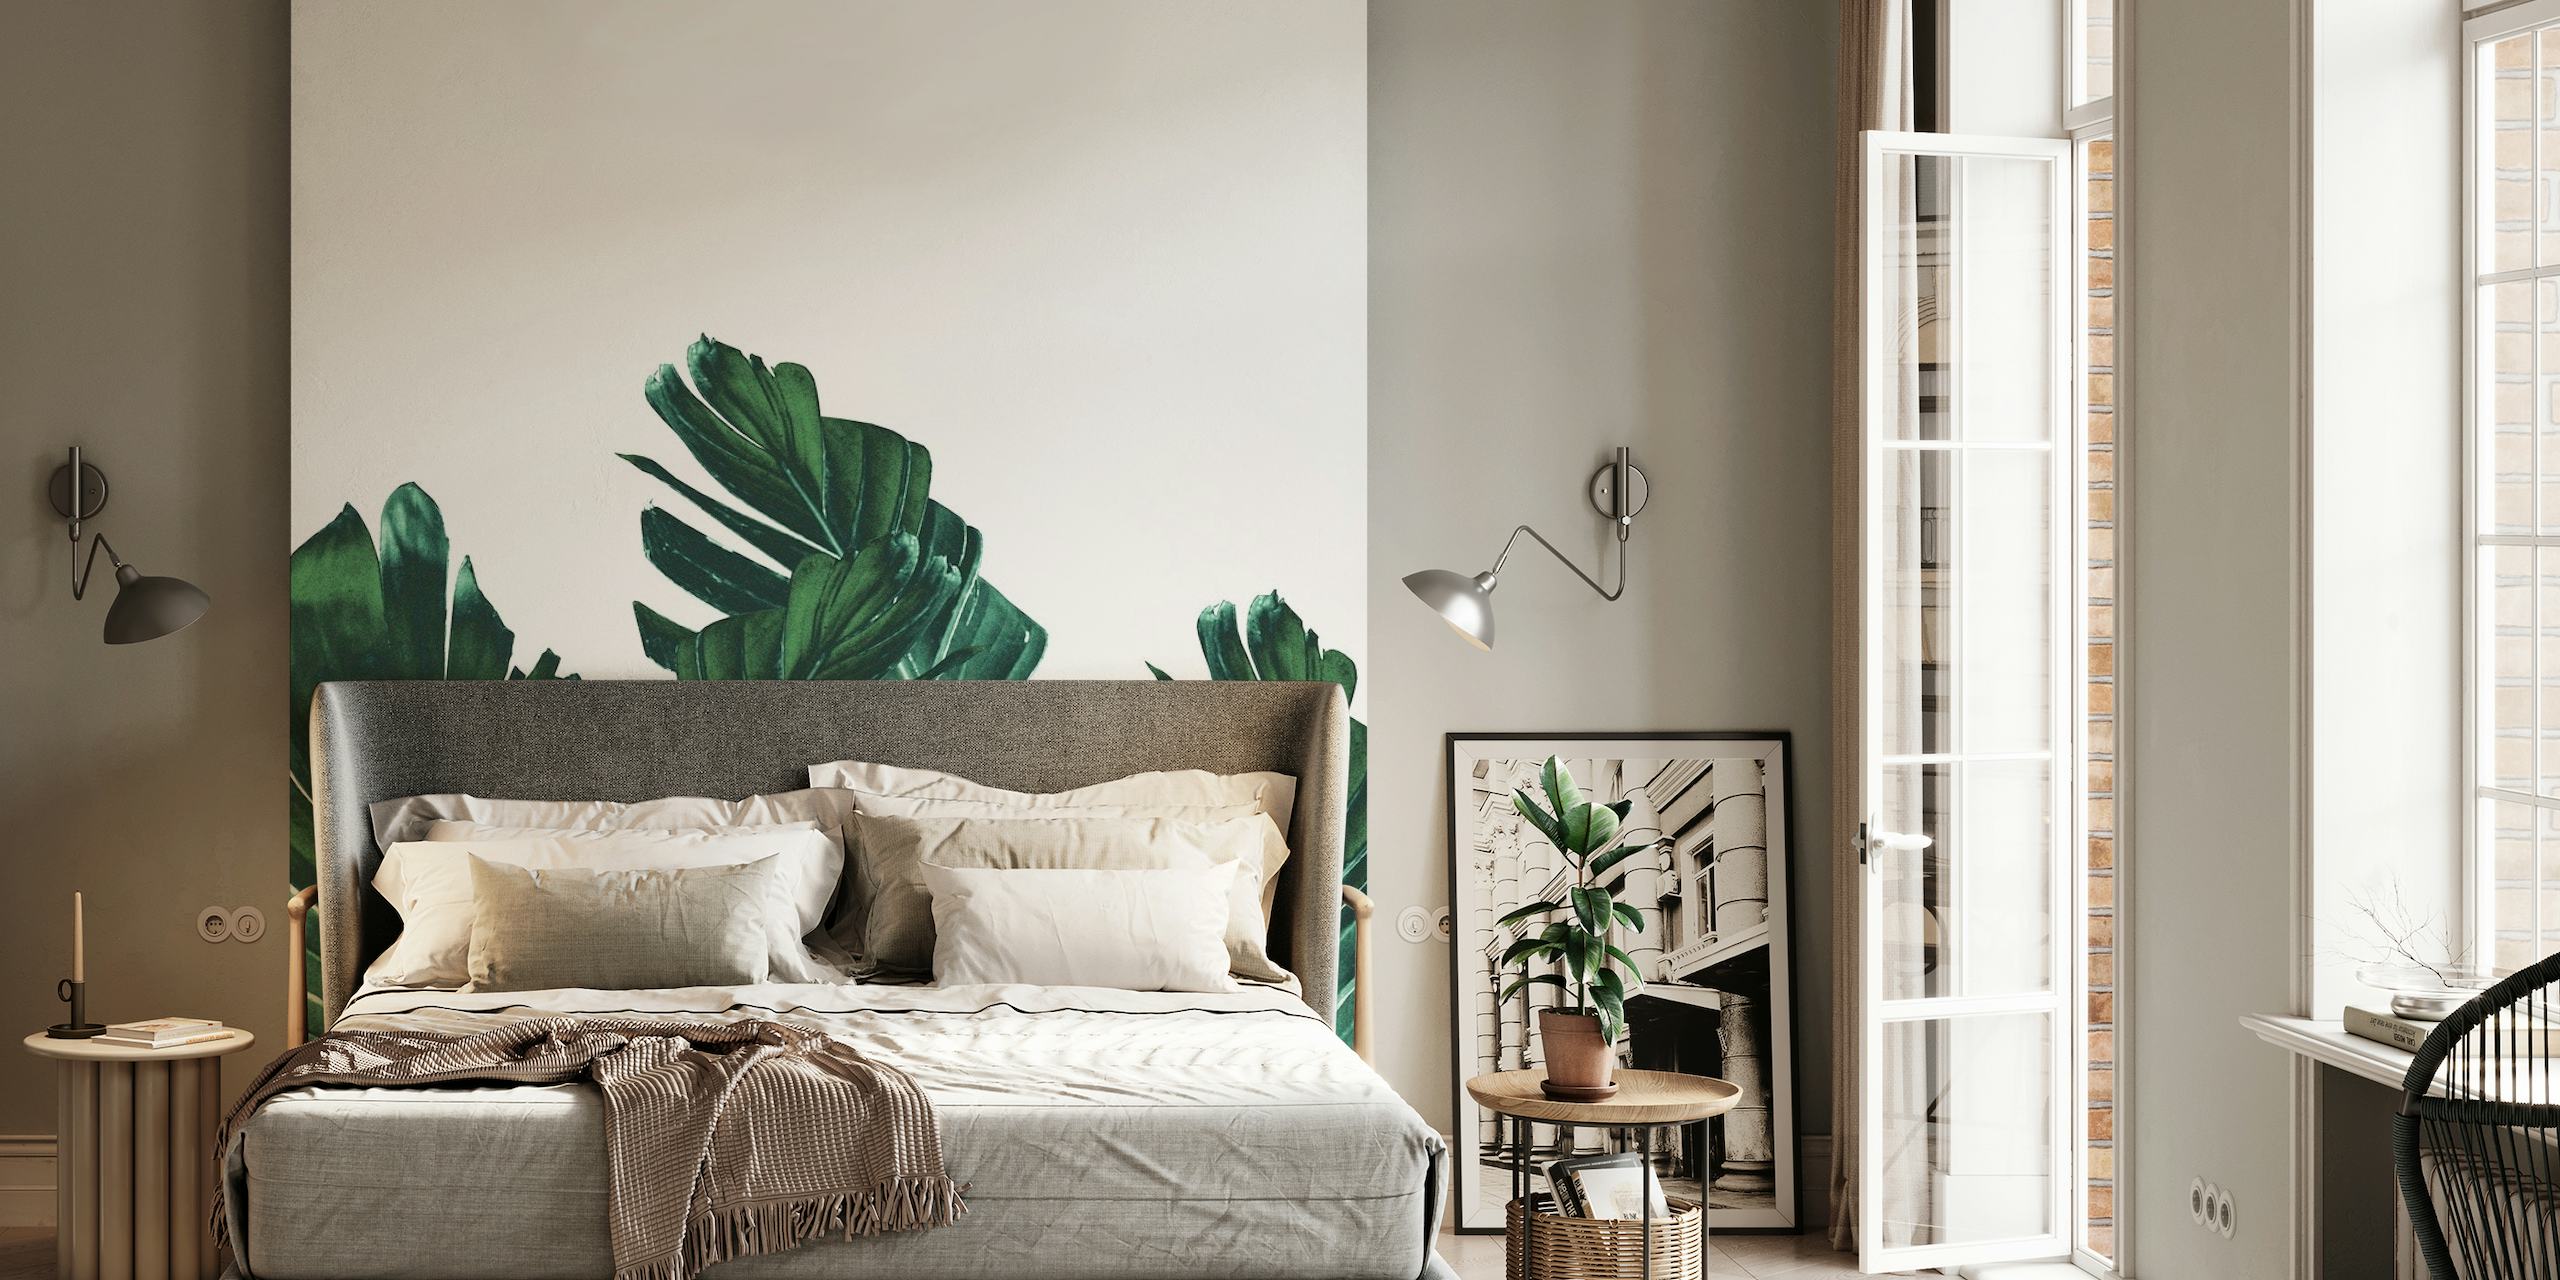 Üppig grünes Bananenblatt-Wandbild schafft eine tropische Atmosphäre